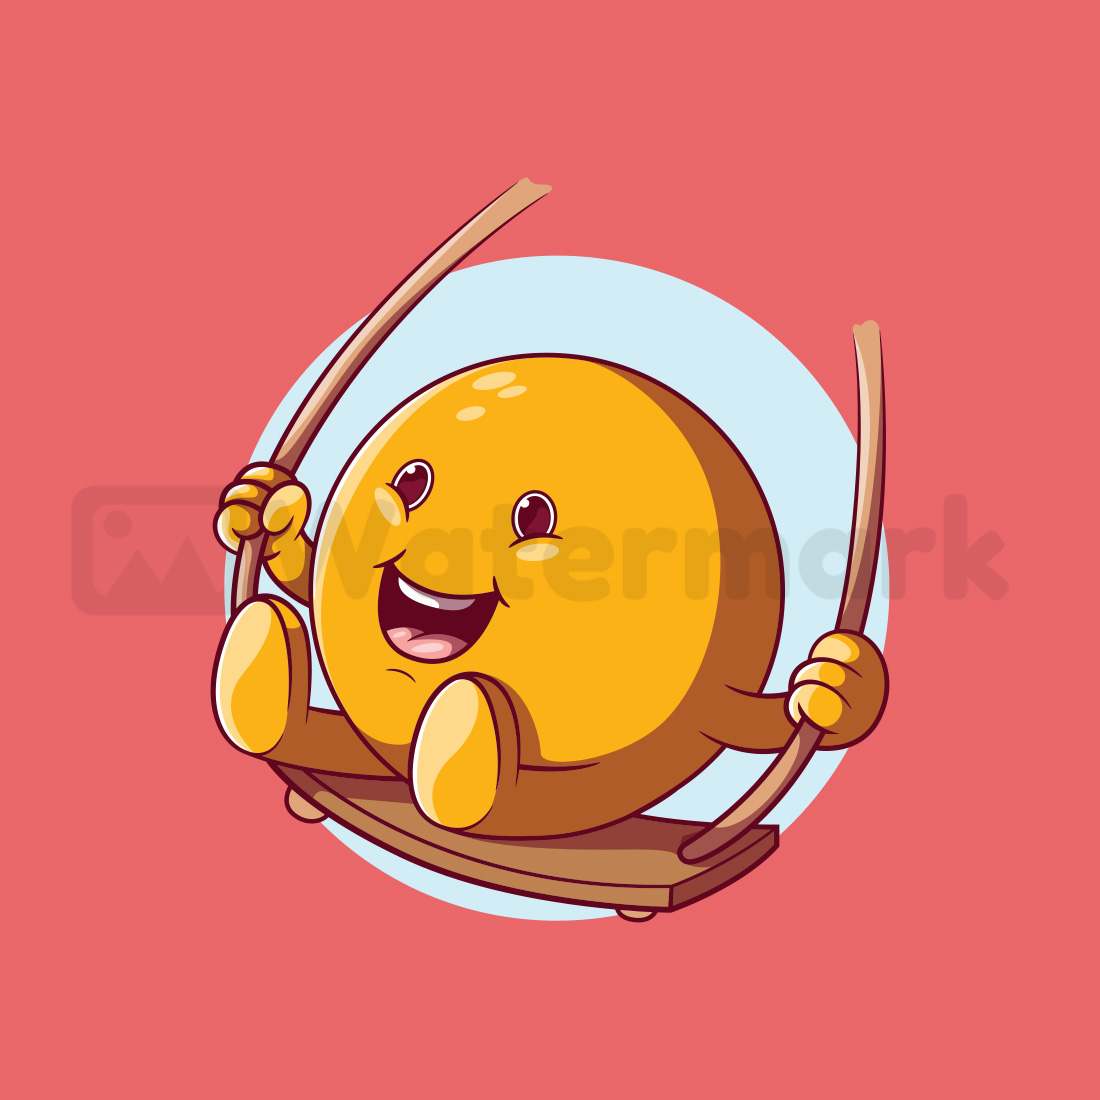 Emoji Swing! cover image.